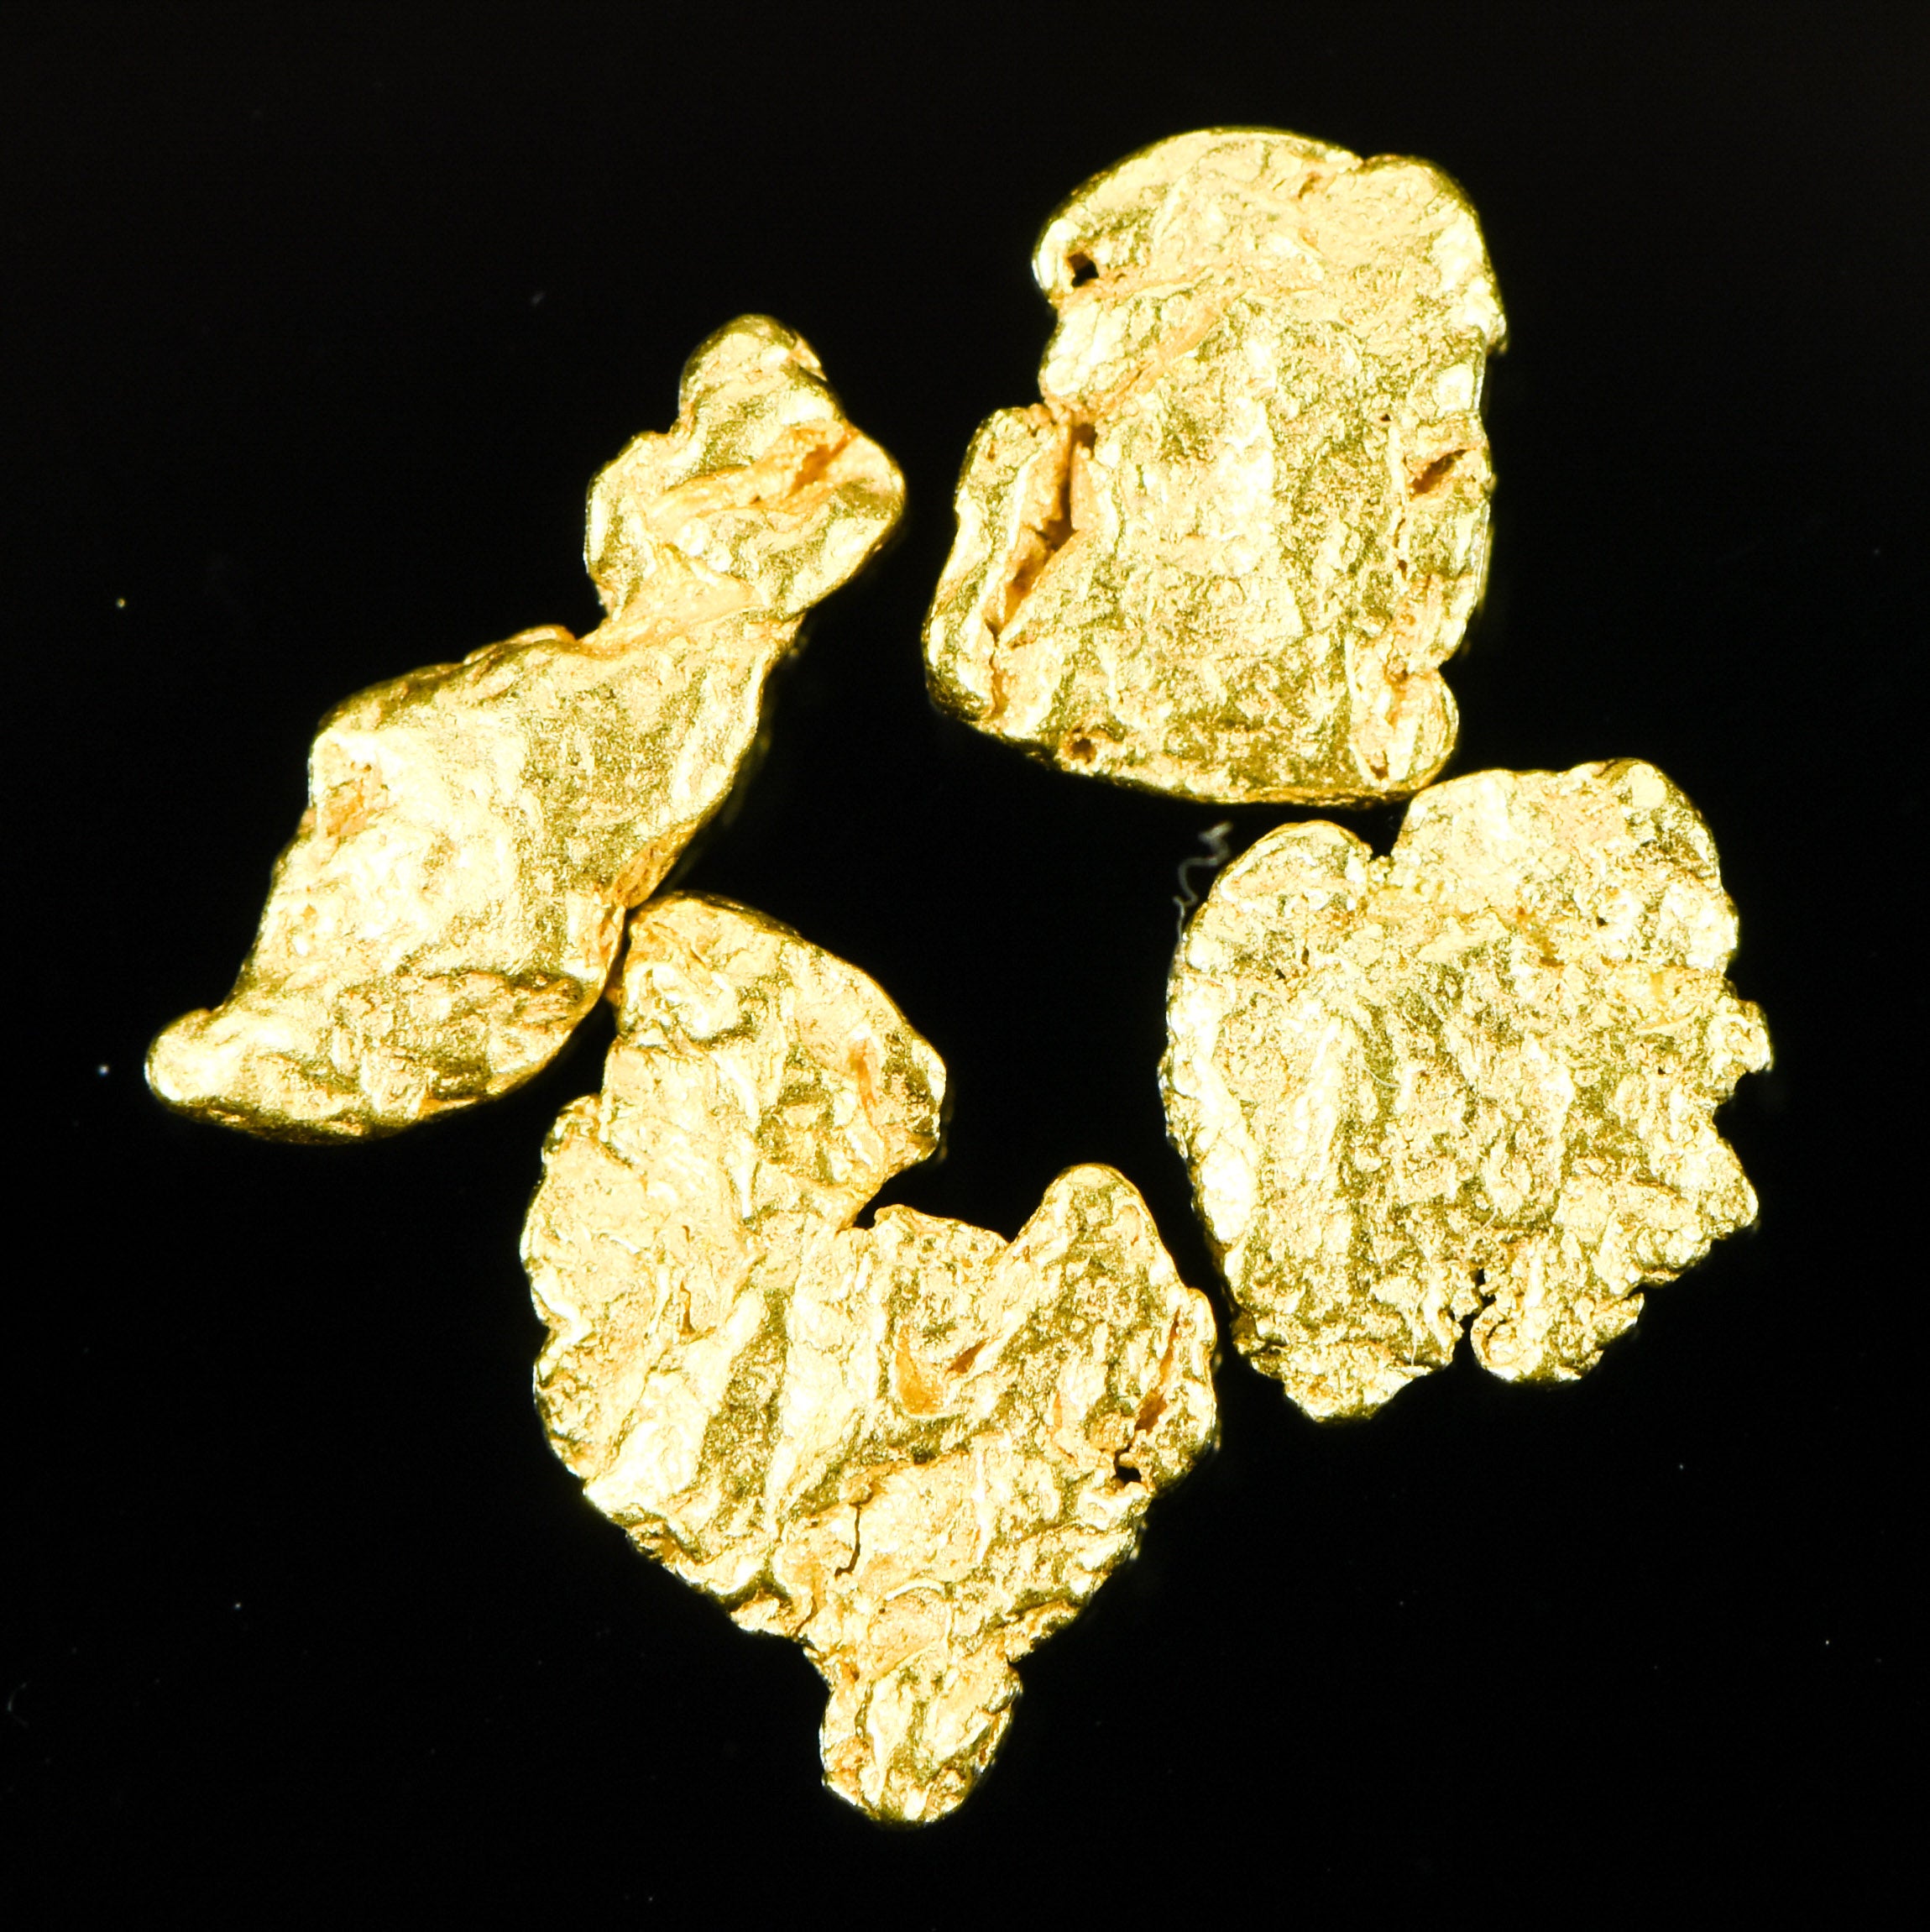 Alaskan Yukon BC Gold Rush Nuggets #6 Mesh 1 Gram of Fines